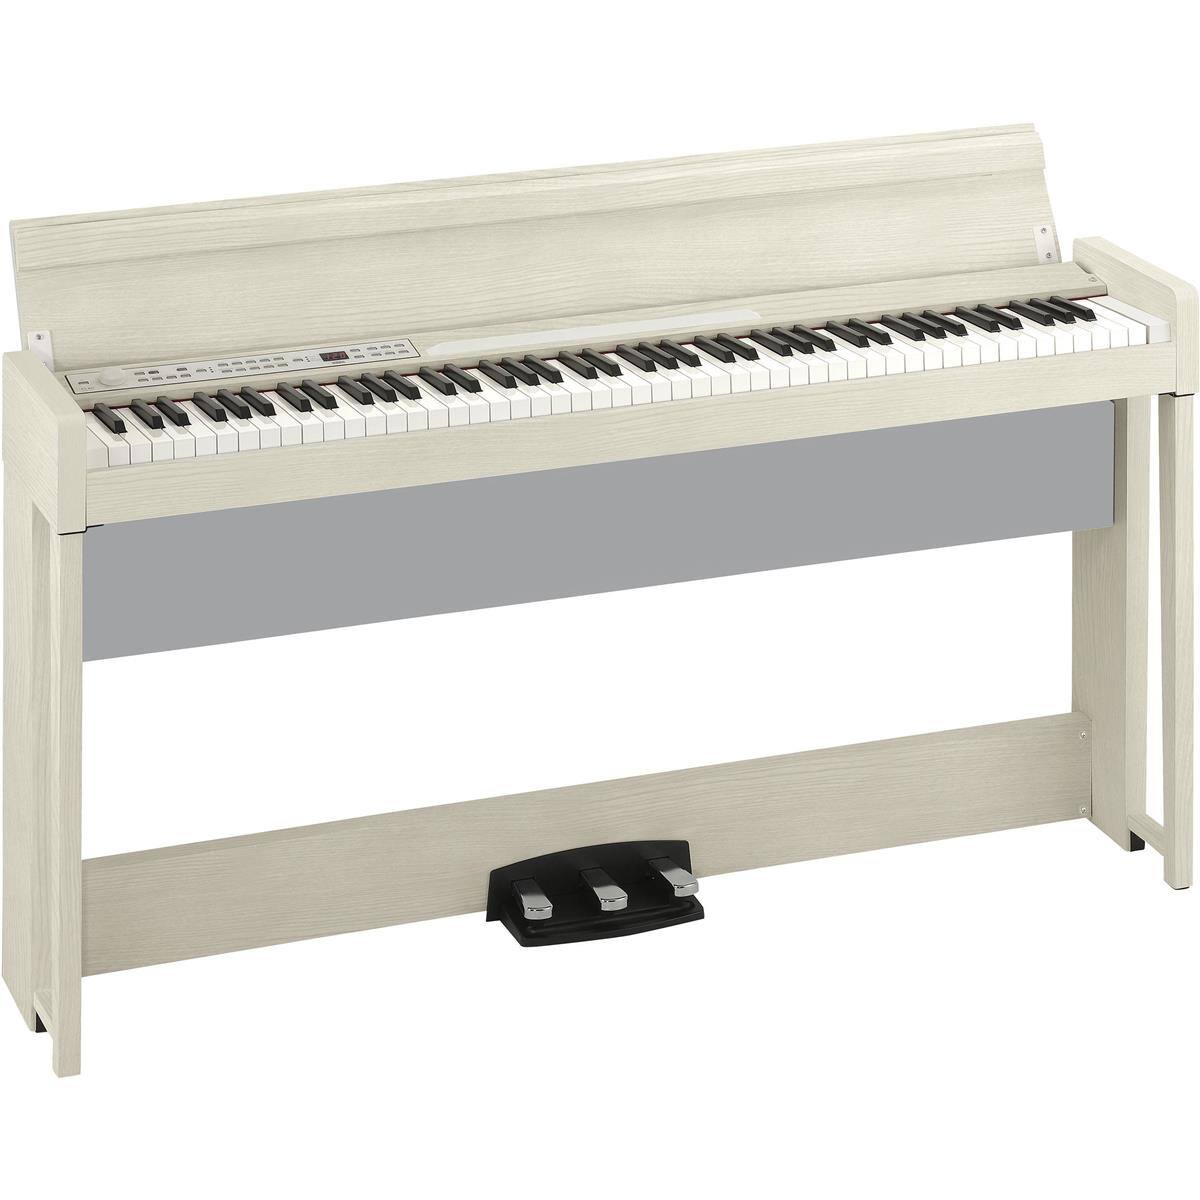 Korg C1 Air Bluetooth 88 Key Digital Piano w/ Hammer Action 3 Keyboard (White Ash) $1000 + free s/h